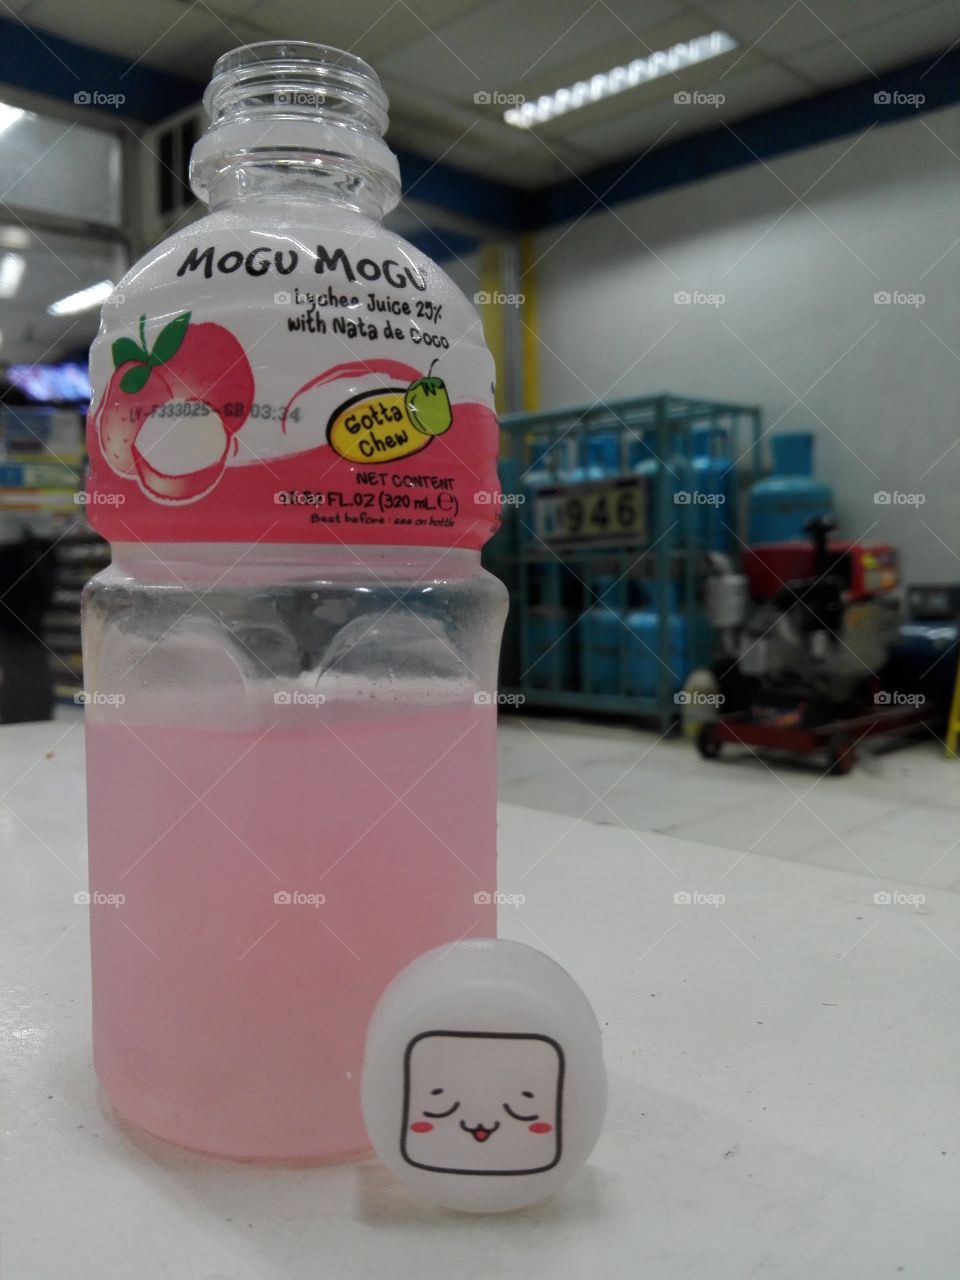 Mogu-mogu, a refreshing drink after a long drive.